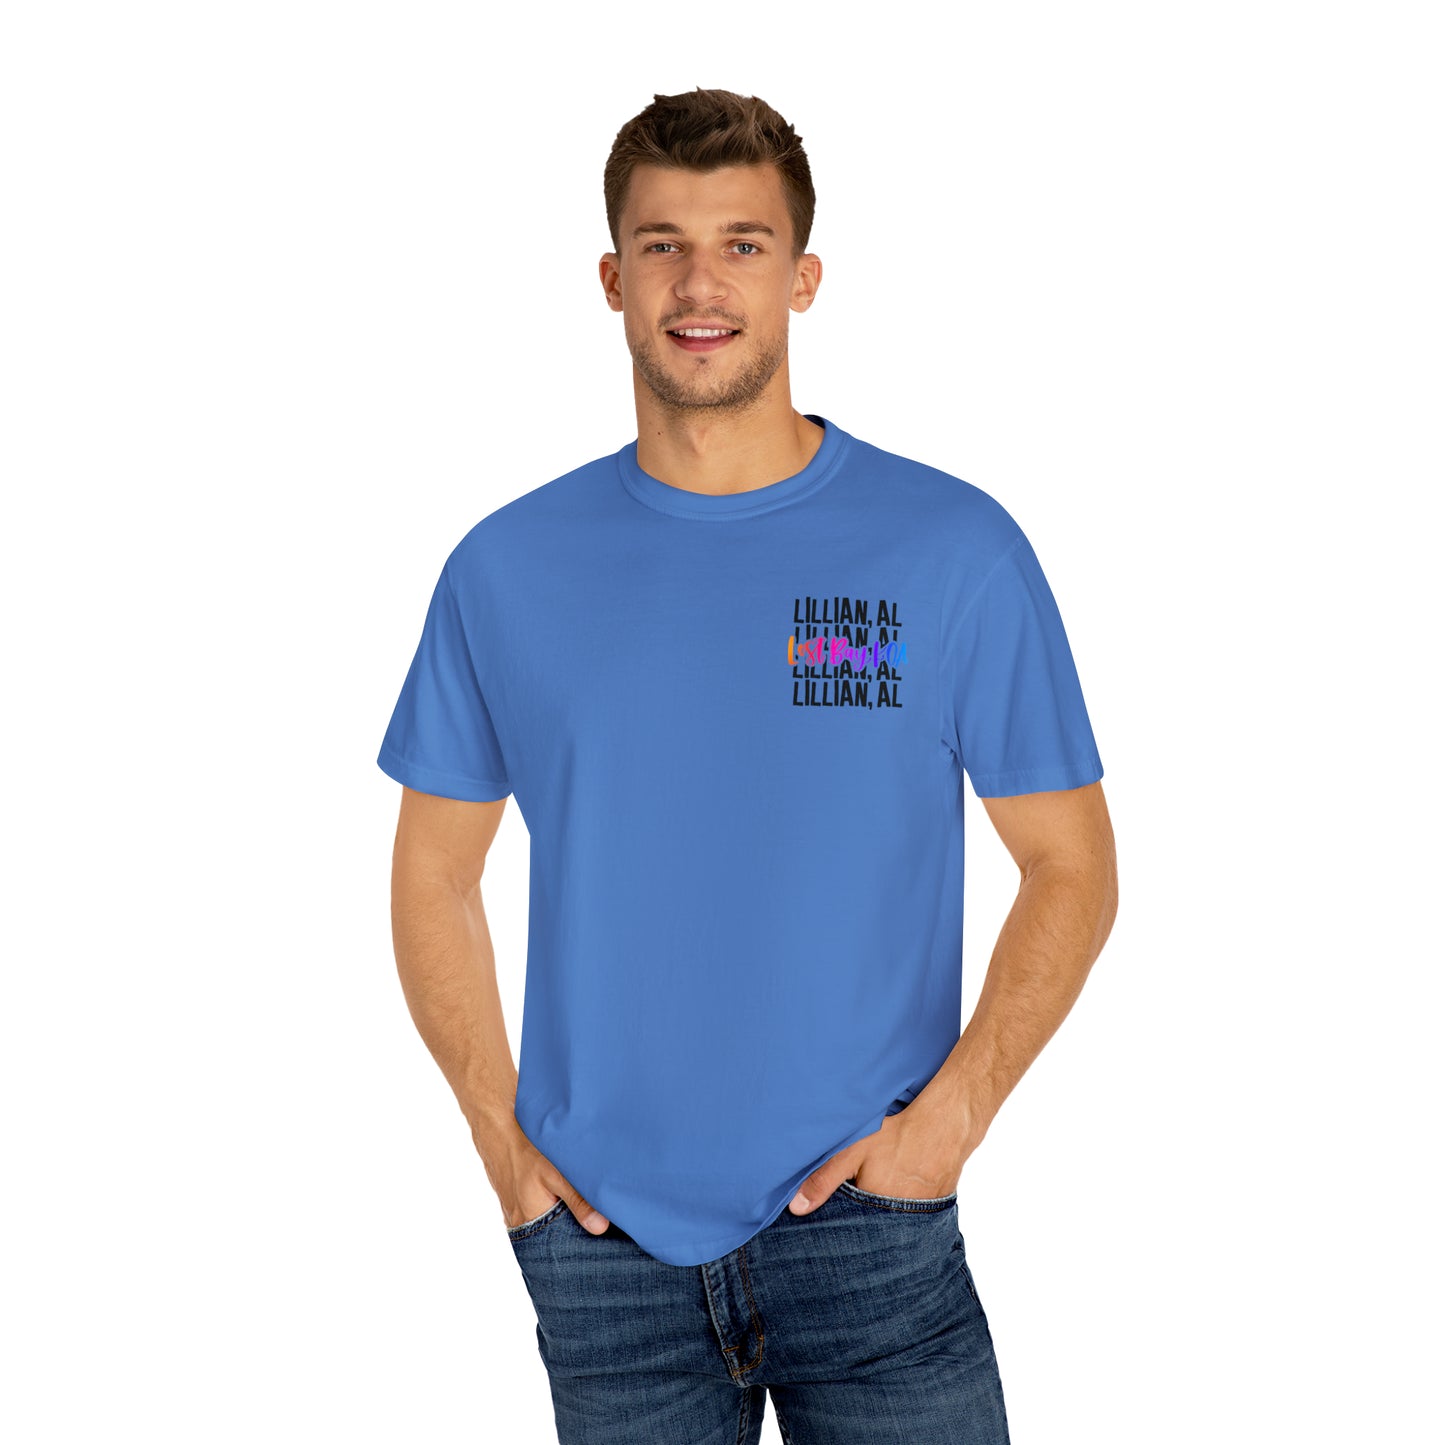 Lost Bay KOA, Lillian AL- Unisex Garment-Dyed T-shirt